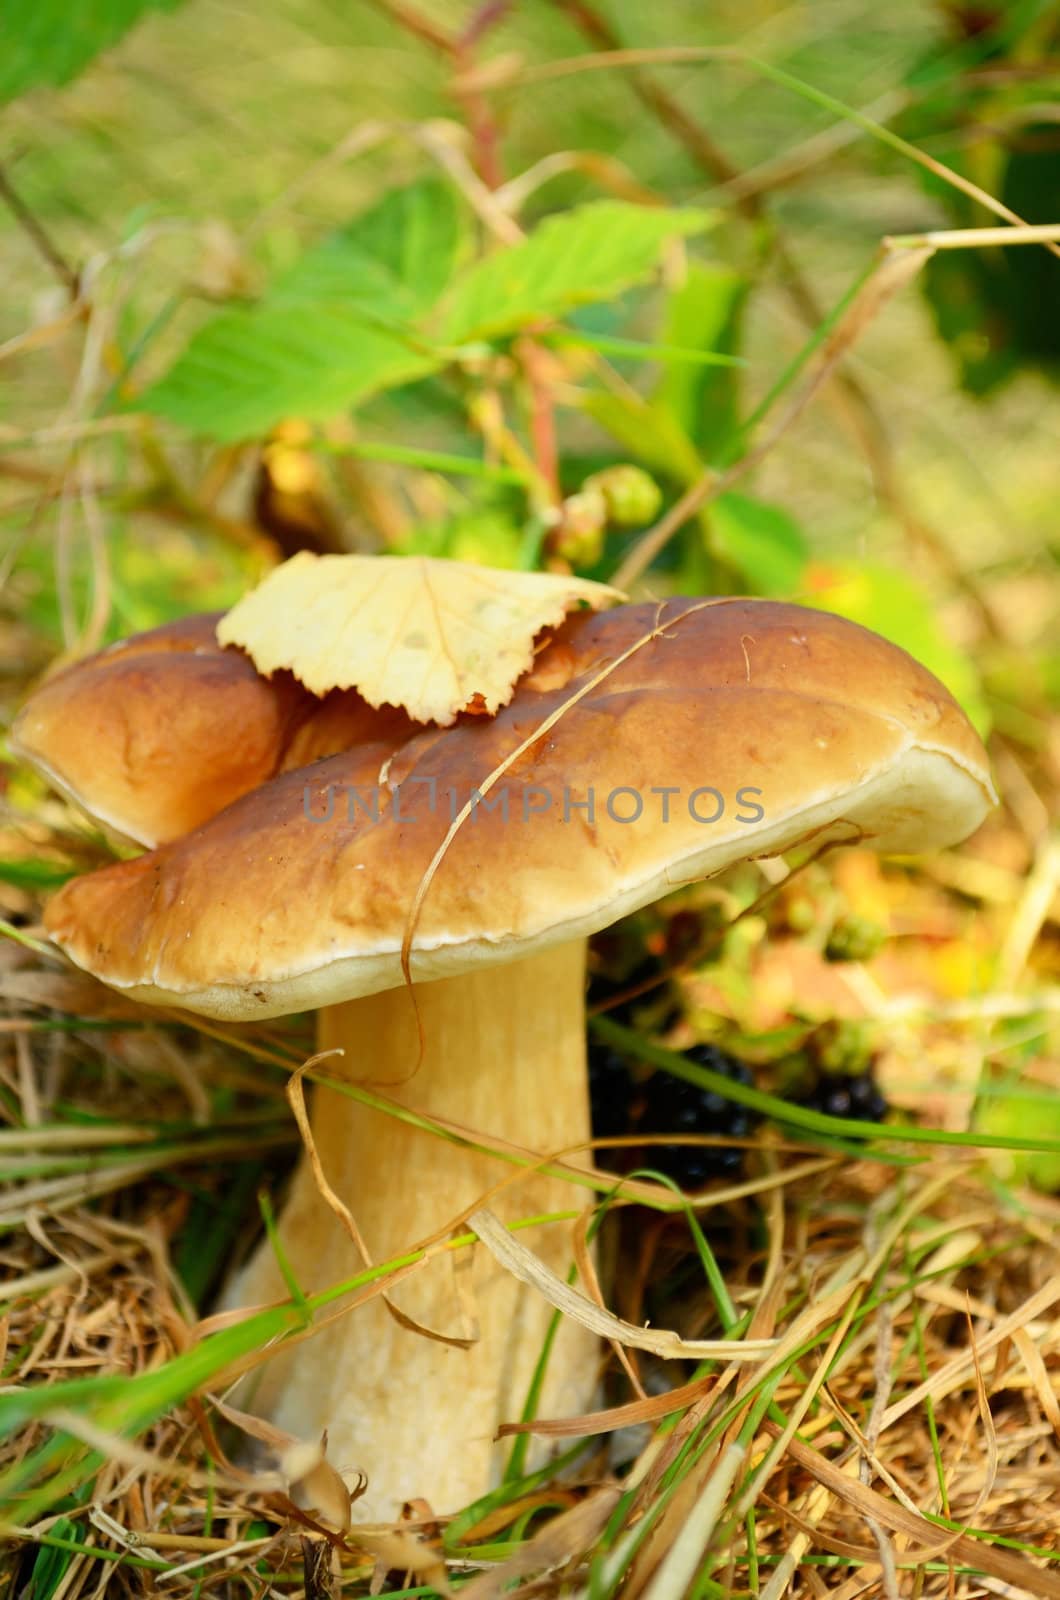 Mushroom by subos